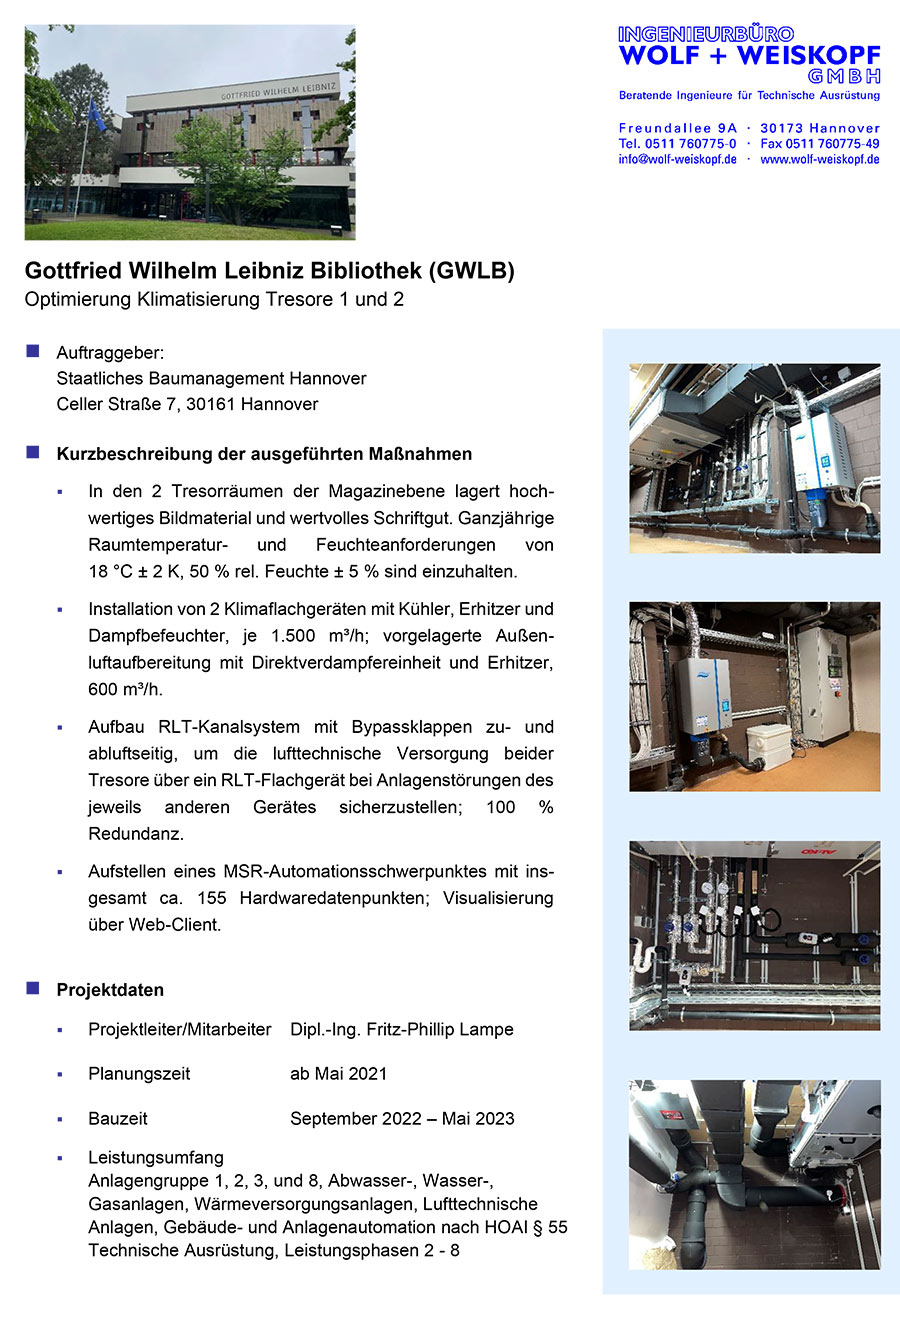 Gottfried Wilhelm Leibniz Bibliothek Projektdatenblatt - Ingenieurbüro Wolf + Weiskopf GmbH